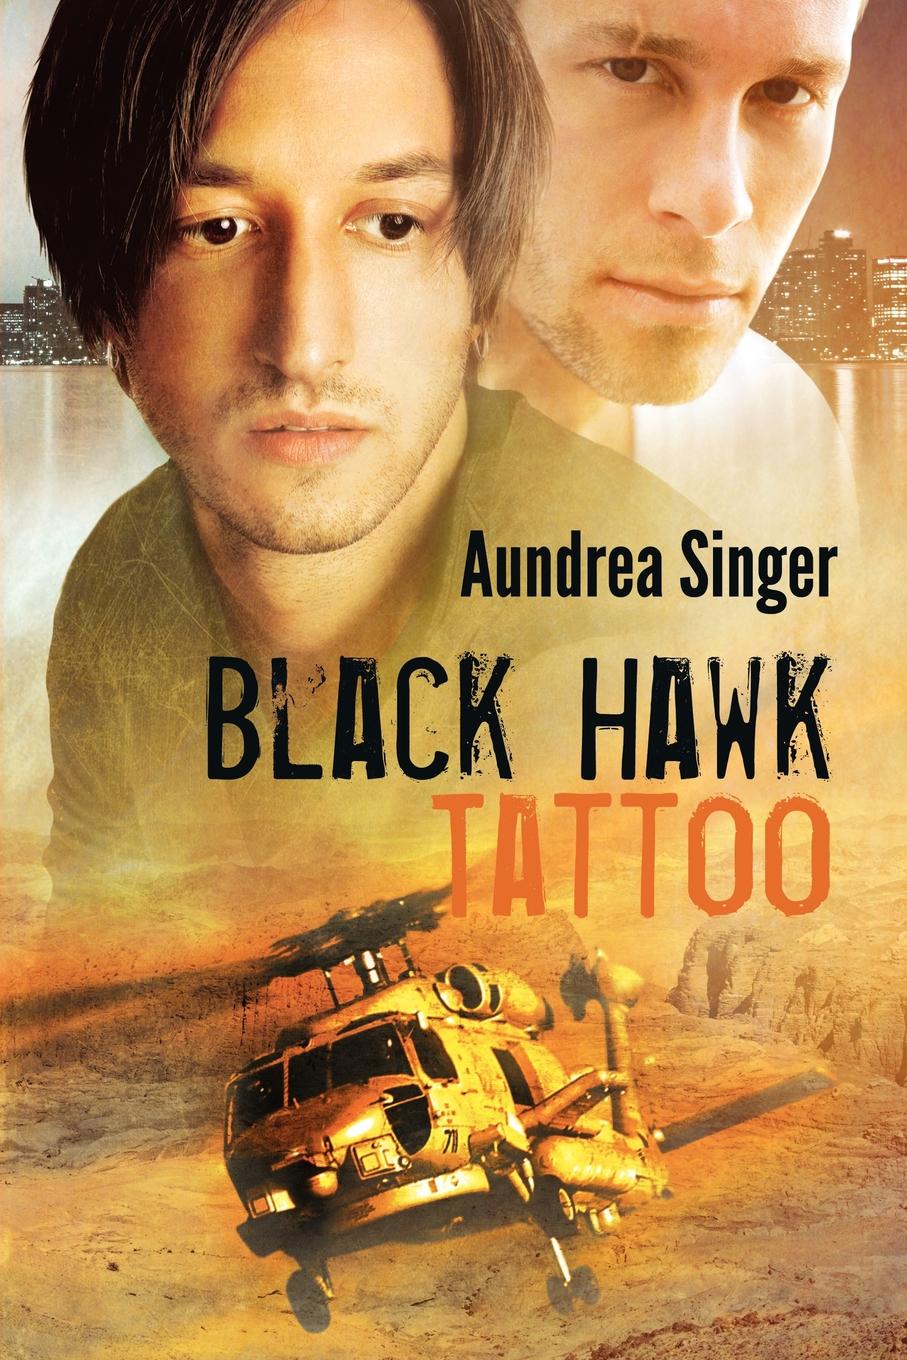 Aundrea Singer Black Hawk Tattoo